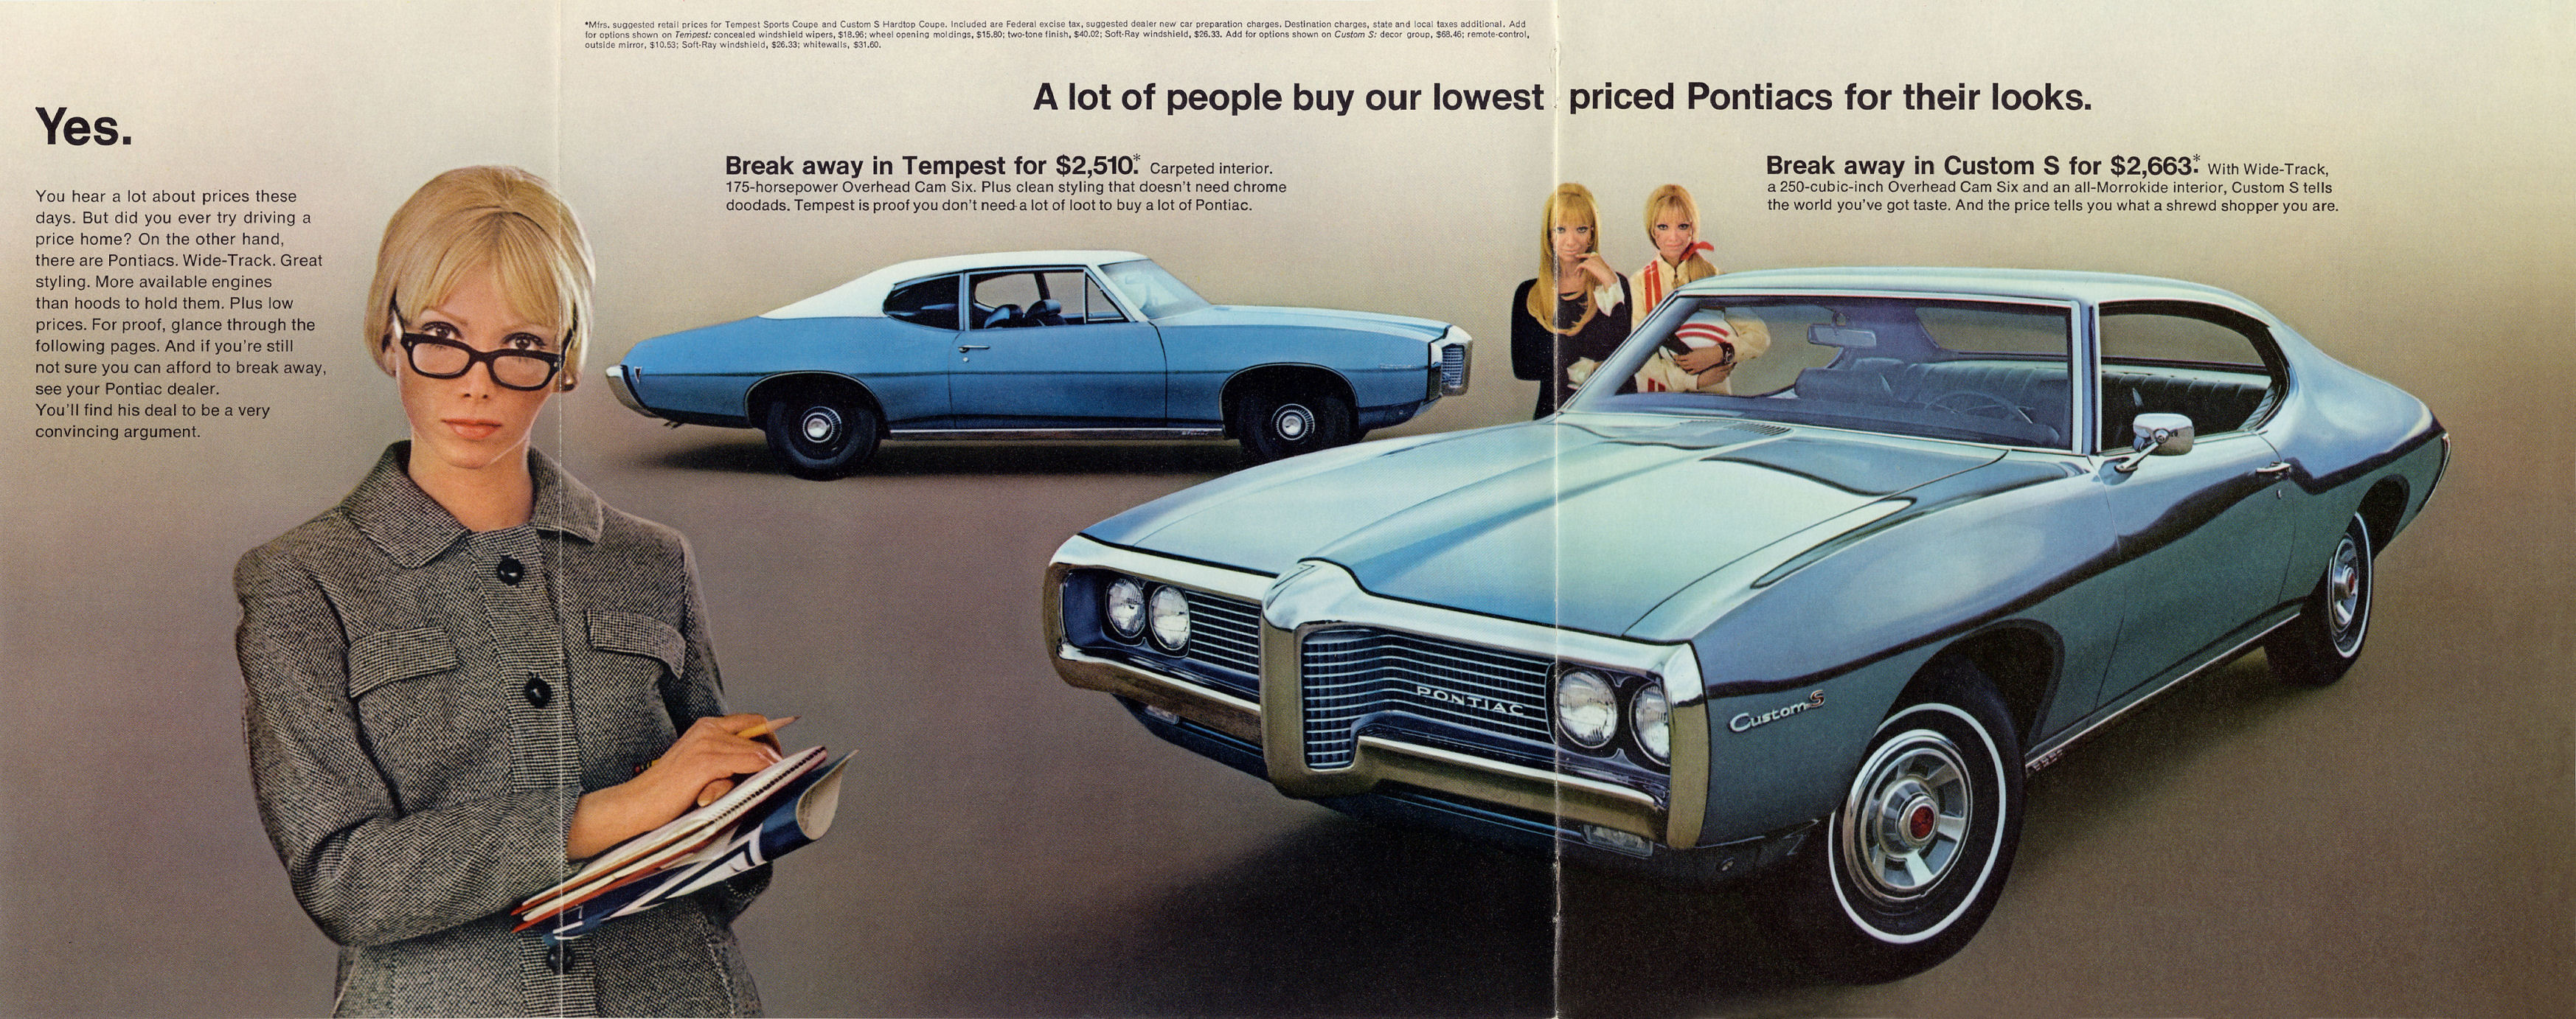 http://www.oldcarbrochures.com/static/NA/Pontiac/1969%20Pontiac/1969_Pontiac_Mailer/1969%20Pontiac%20Mailer-02-03.jpg